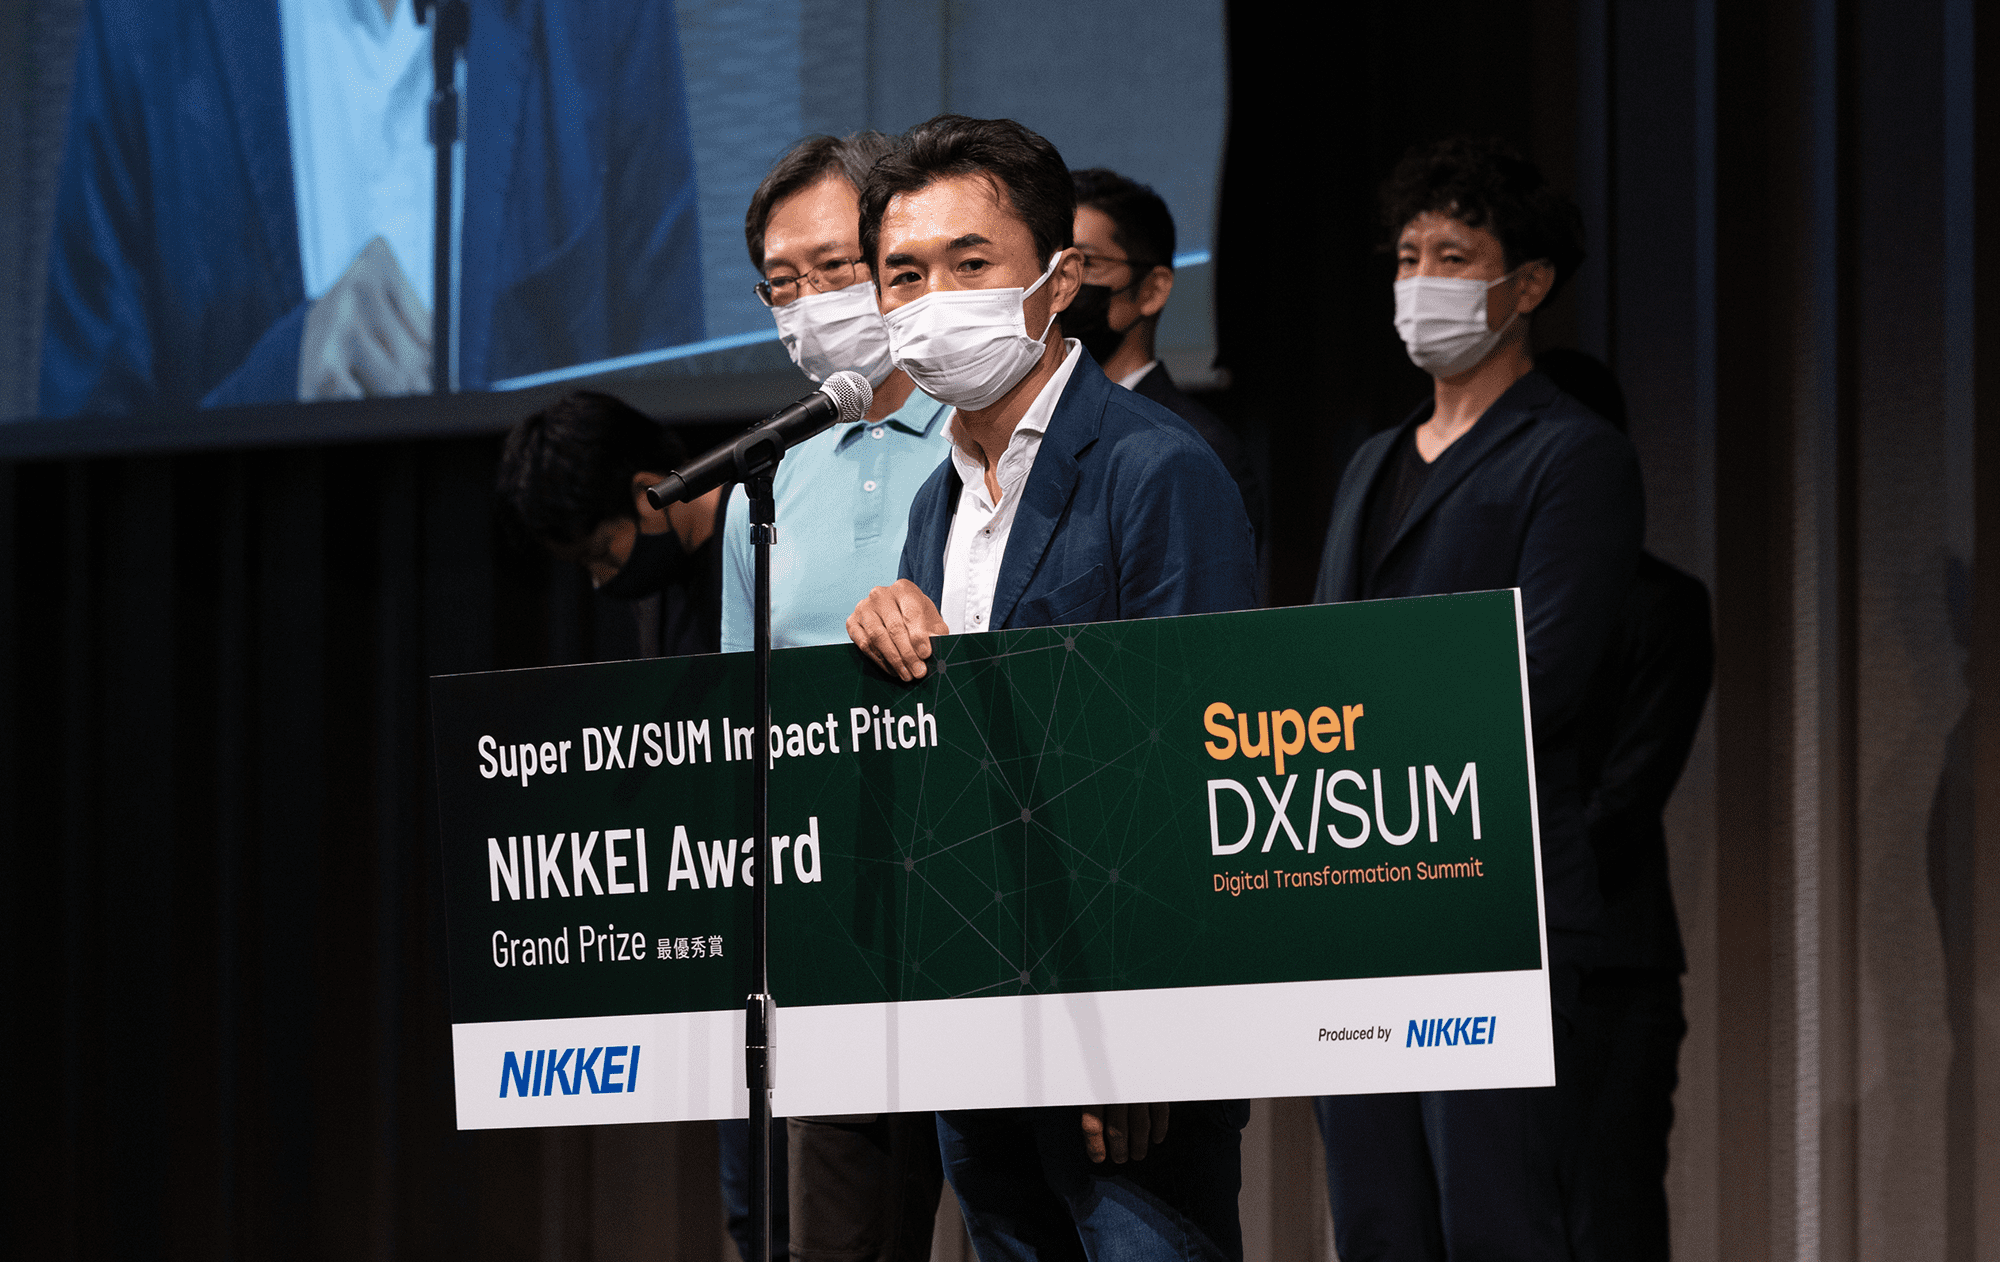 Nikkei Award Grand Prize